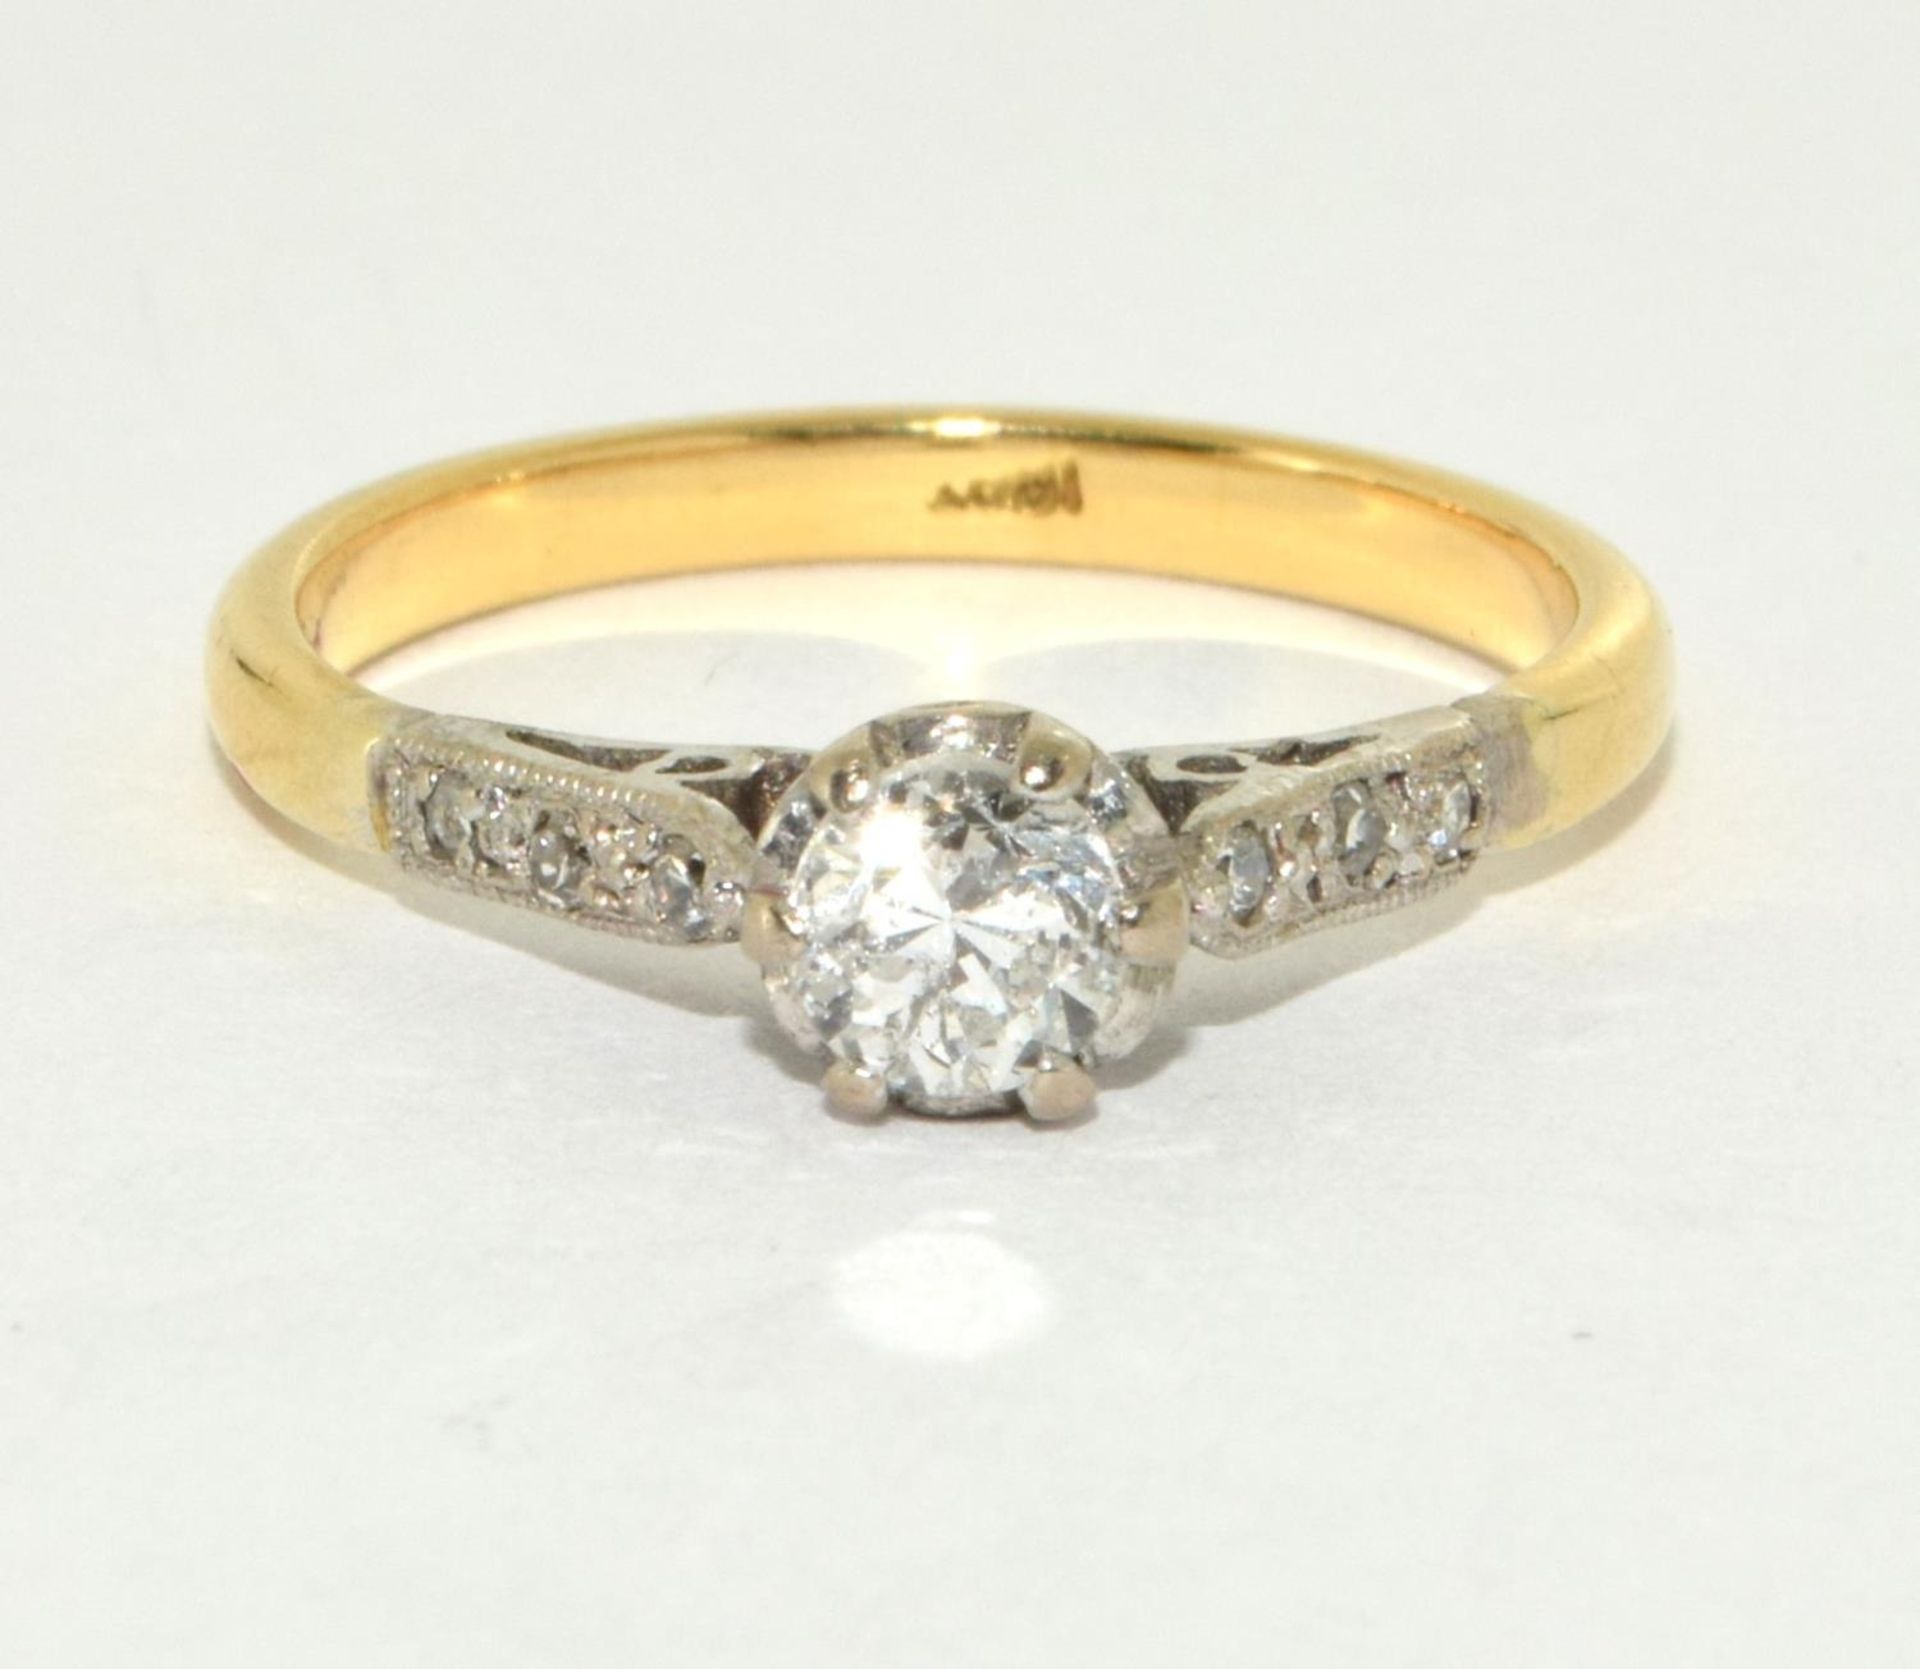 An old 18ct diamond solitaire 0.25ct minimum rose cut diamond shank ring Size L 1/2.